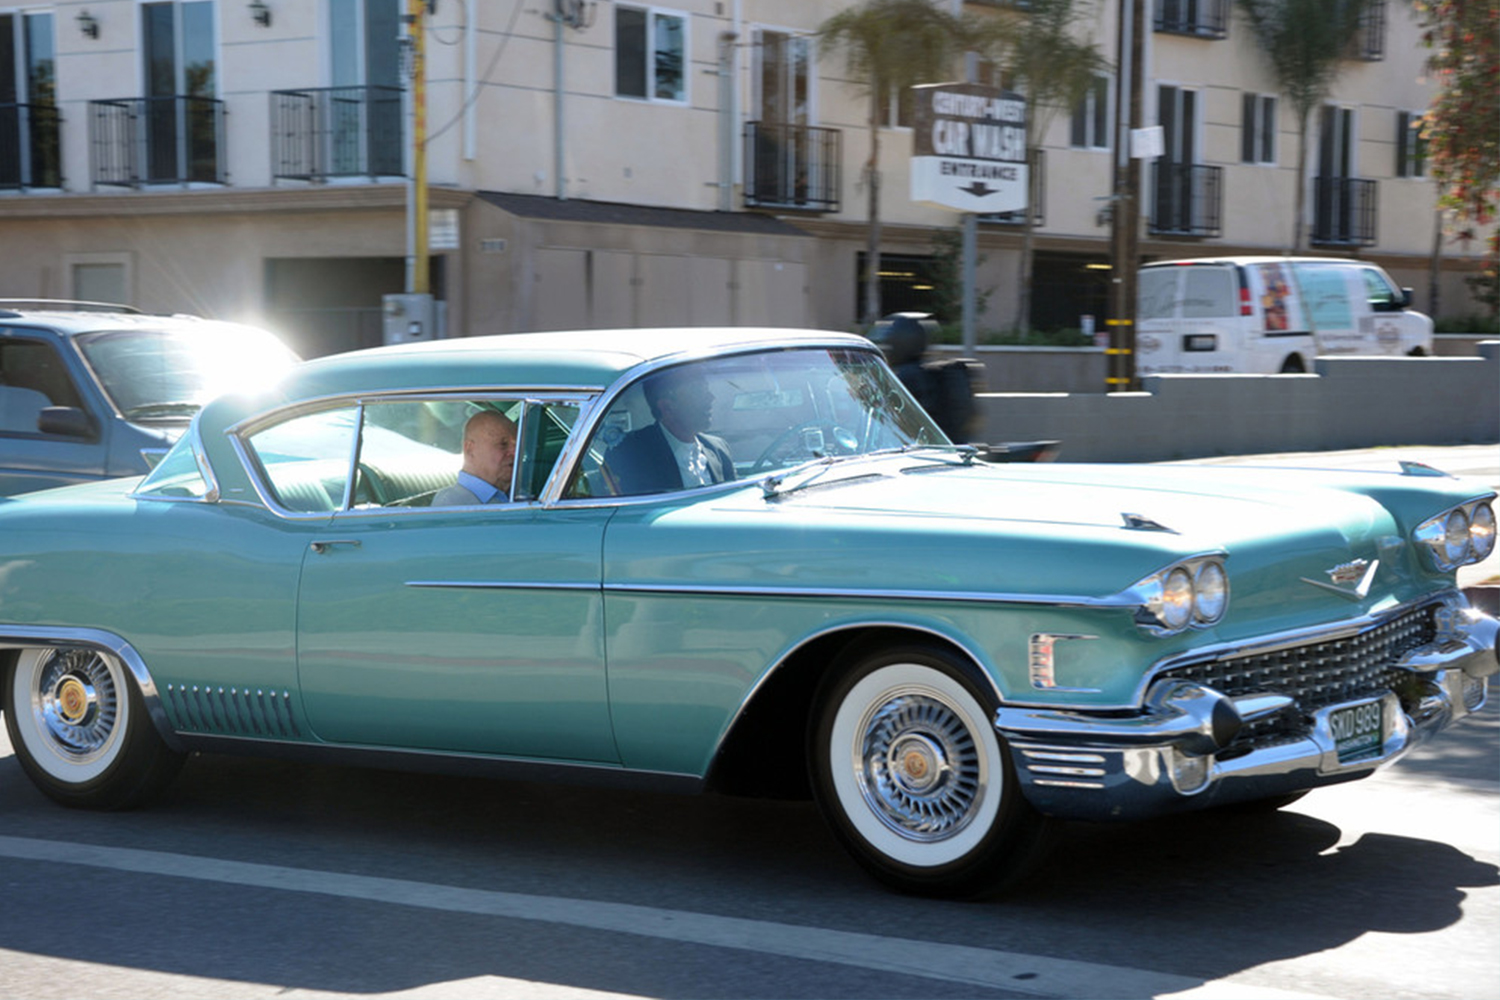 1958 Cadillac Eldorado Comedians in Cars Getting Coffee